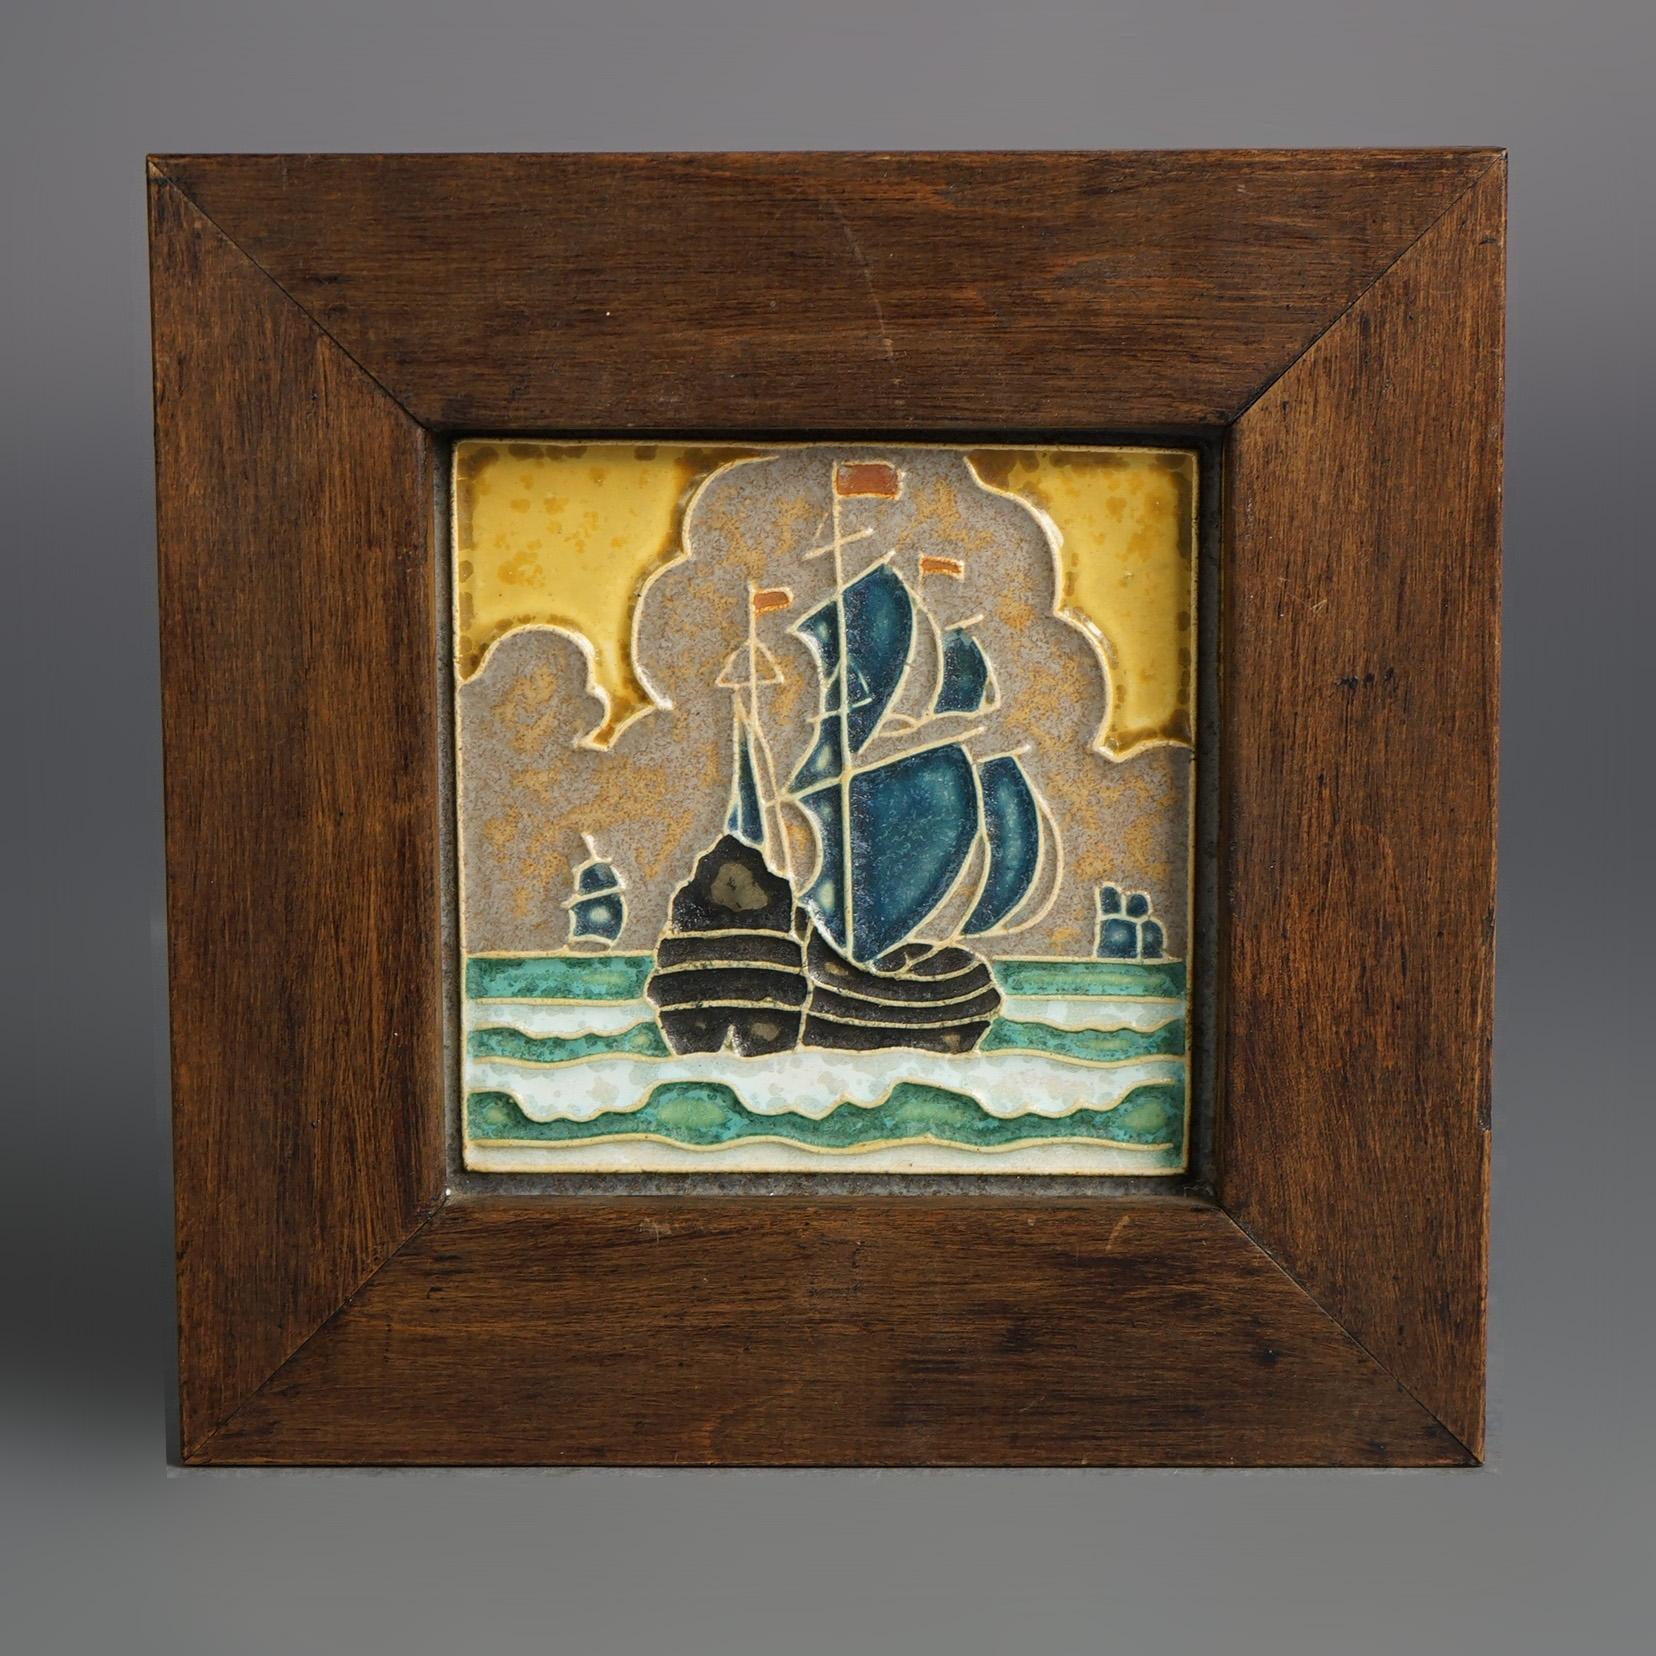 Antique Delft Arts & Crafts Framed Pottery Tile, Seascape & Tall Mast Ship, Signed & Framed, C1920

Measures- 7.5''H x 7.5''W x .75''D